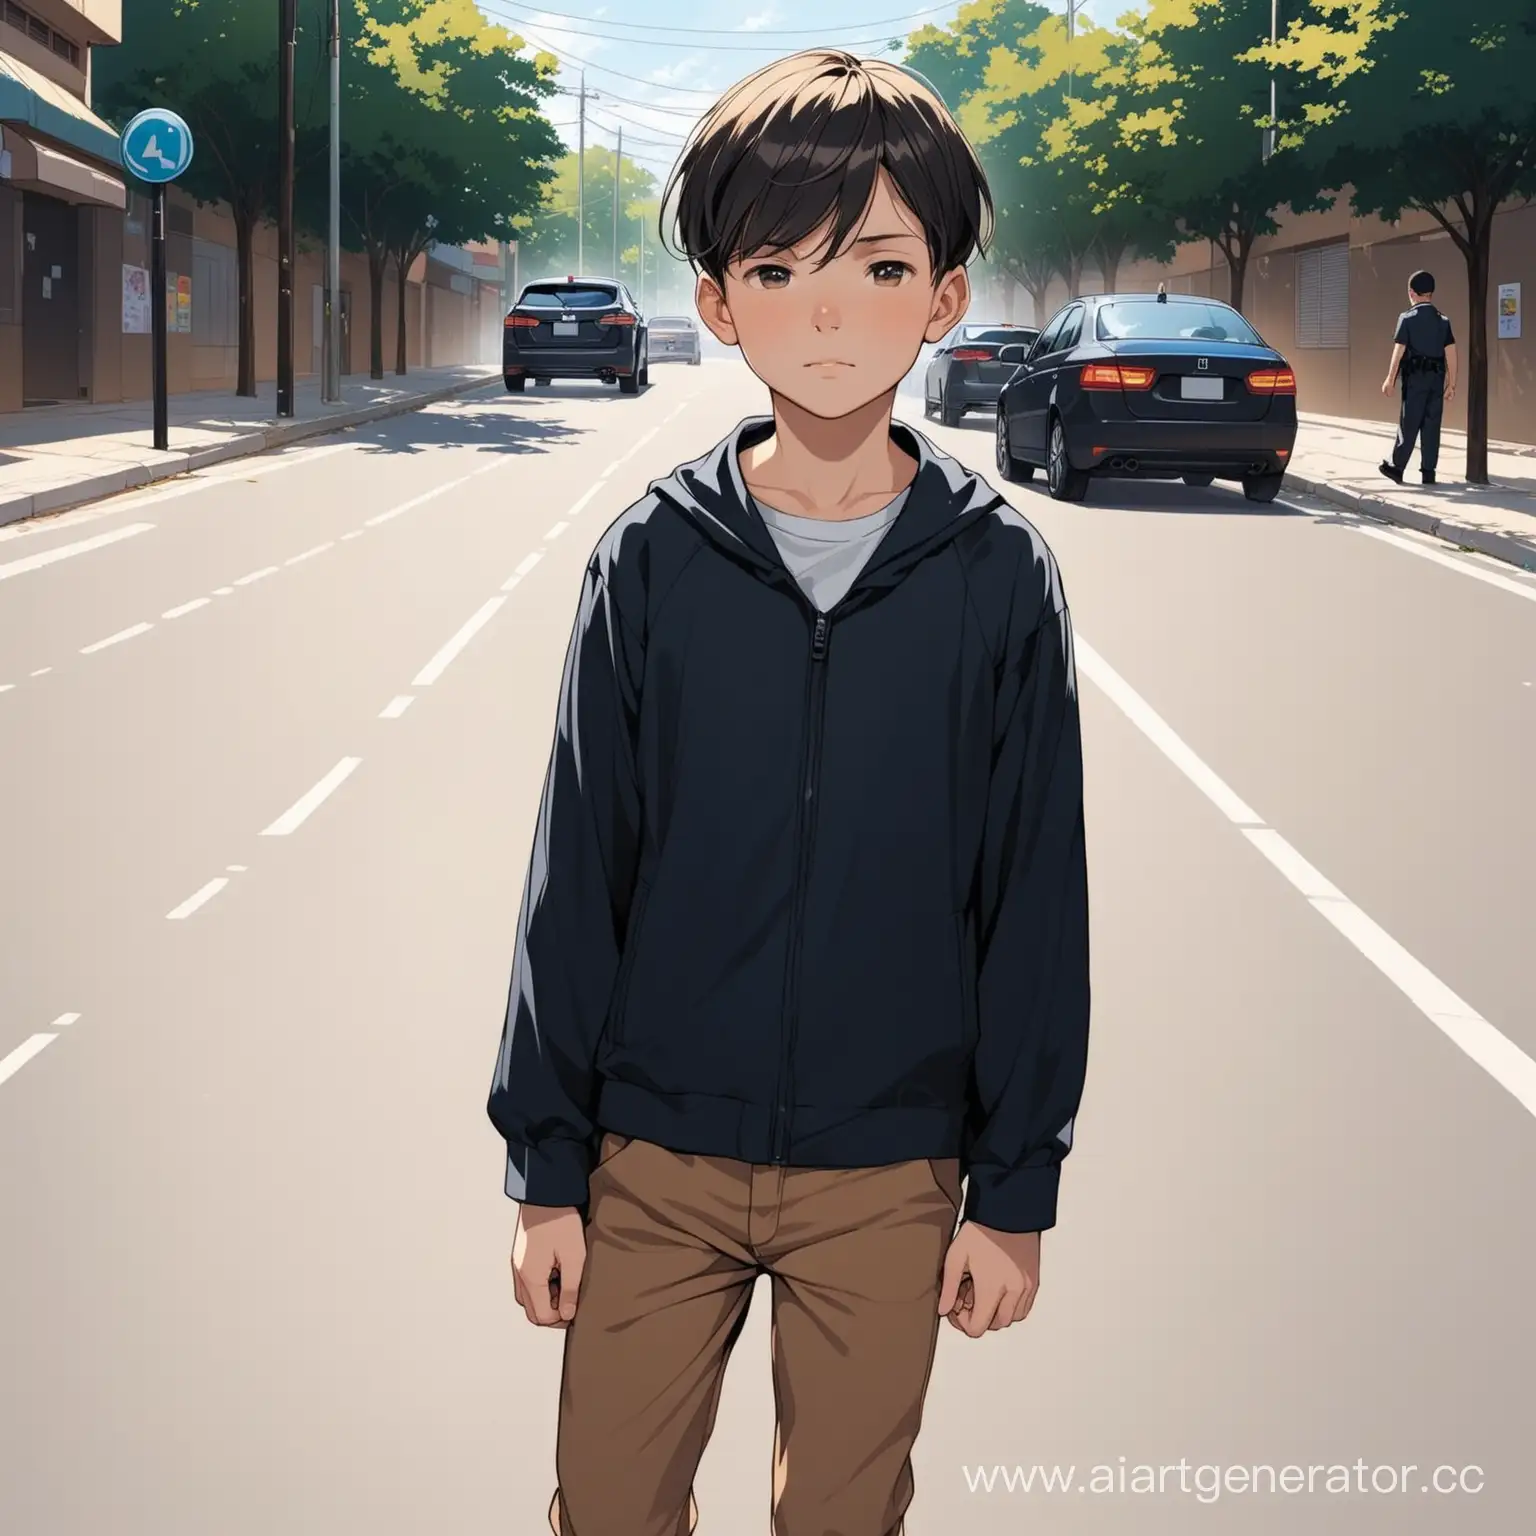 Youthful-Explorer-12YearOld-Boy-Venturing-the-Urban-Landscape